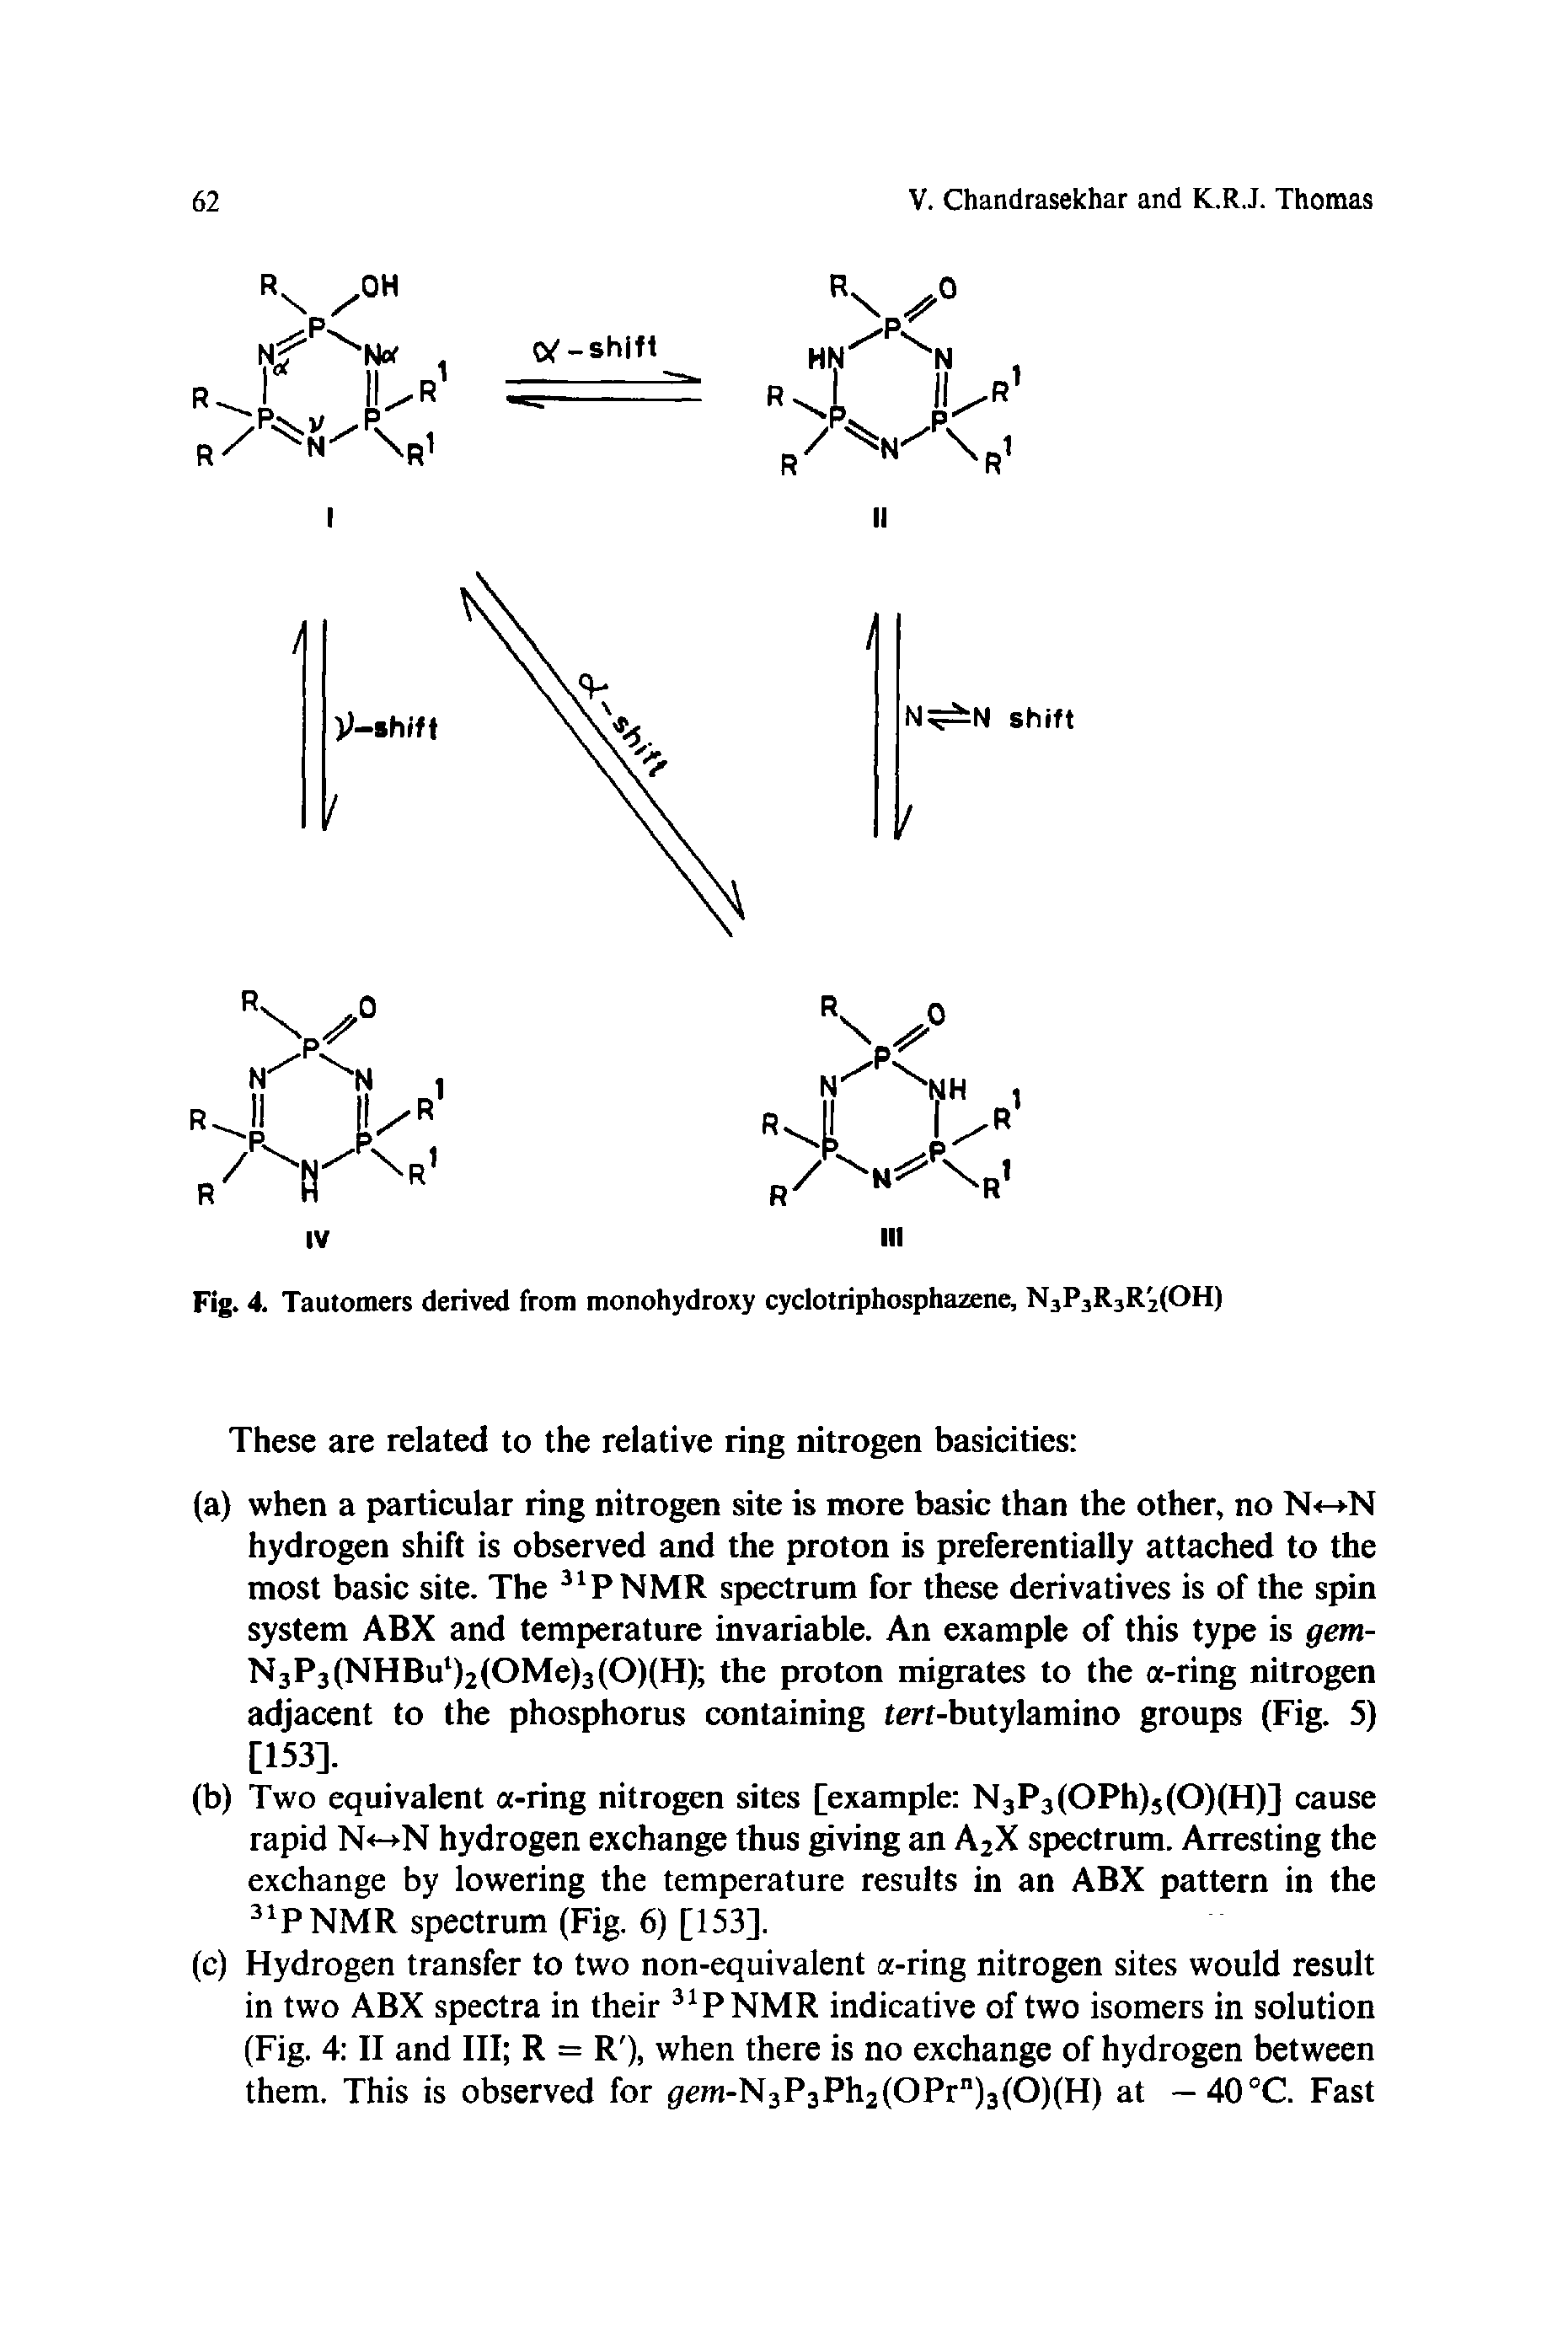 Fig. 4. Tautomers derived from monohydroxy cyclotriphosphazene, NjPjRjR jfOH)...